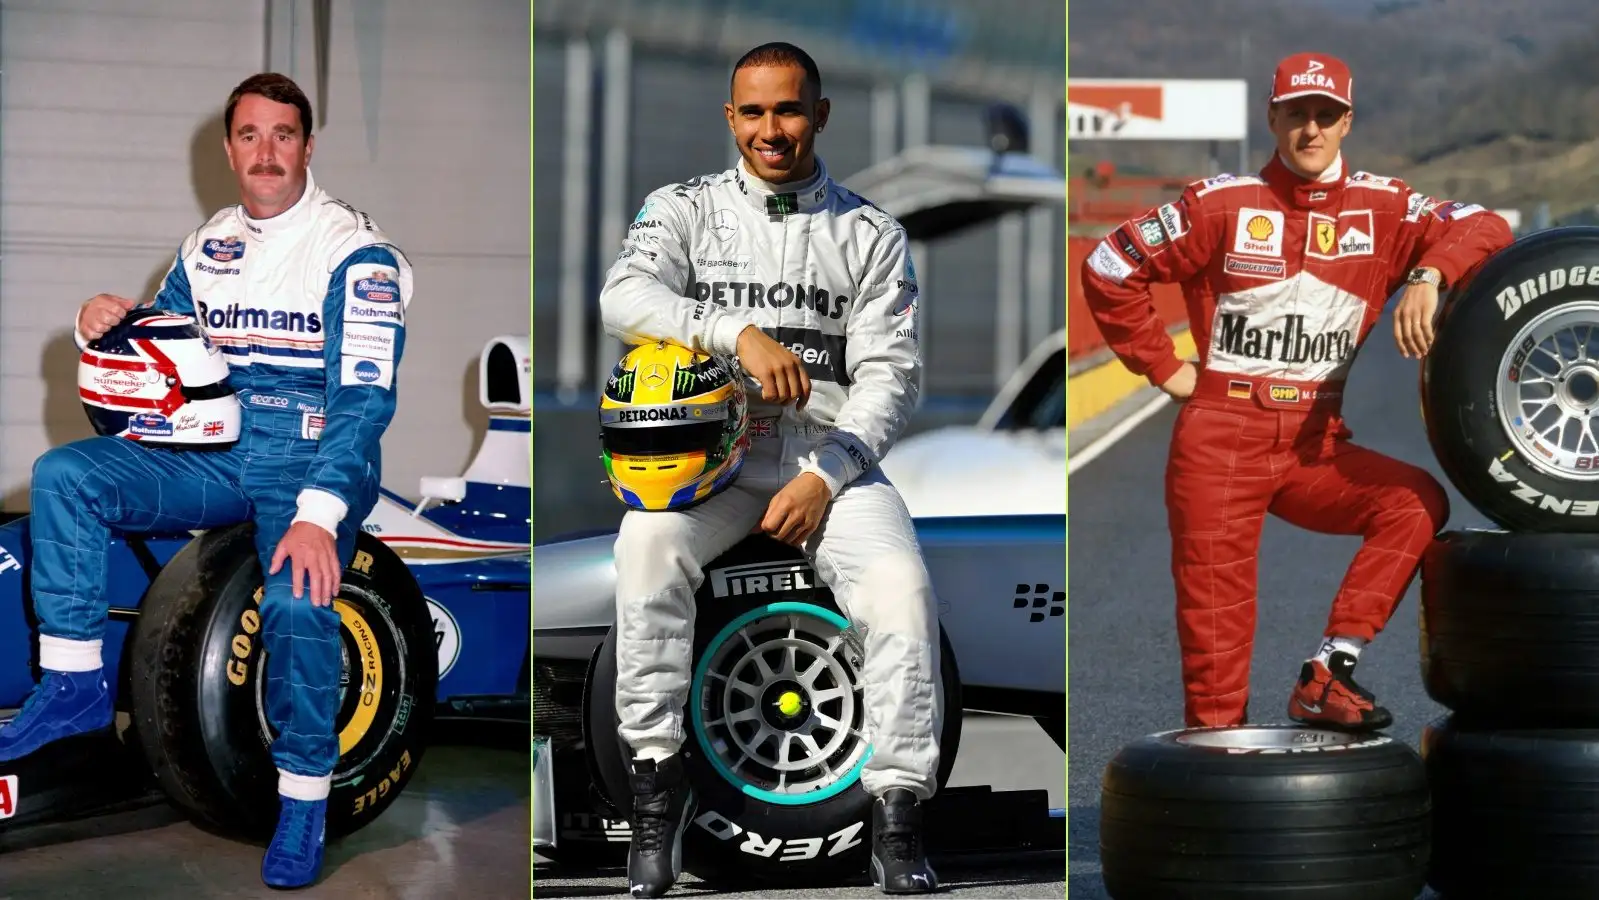 Nigel Mansell, Lewis Hamilton and Michael Schumacher